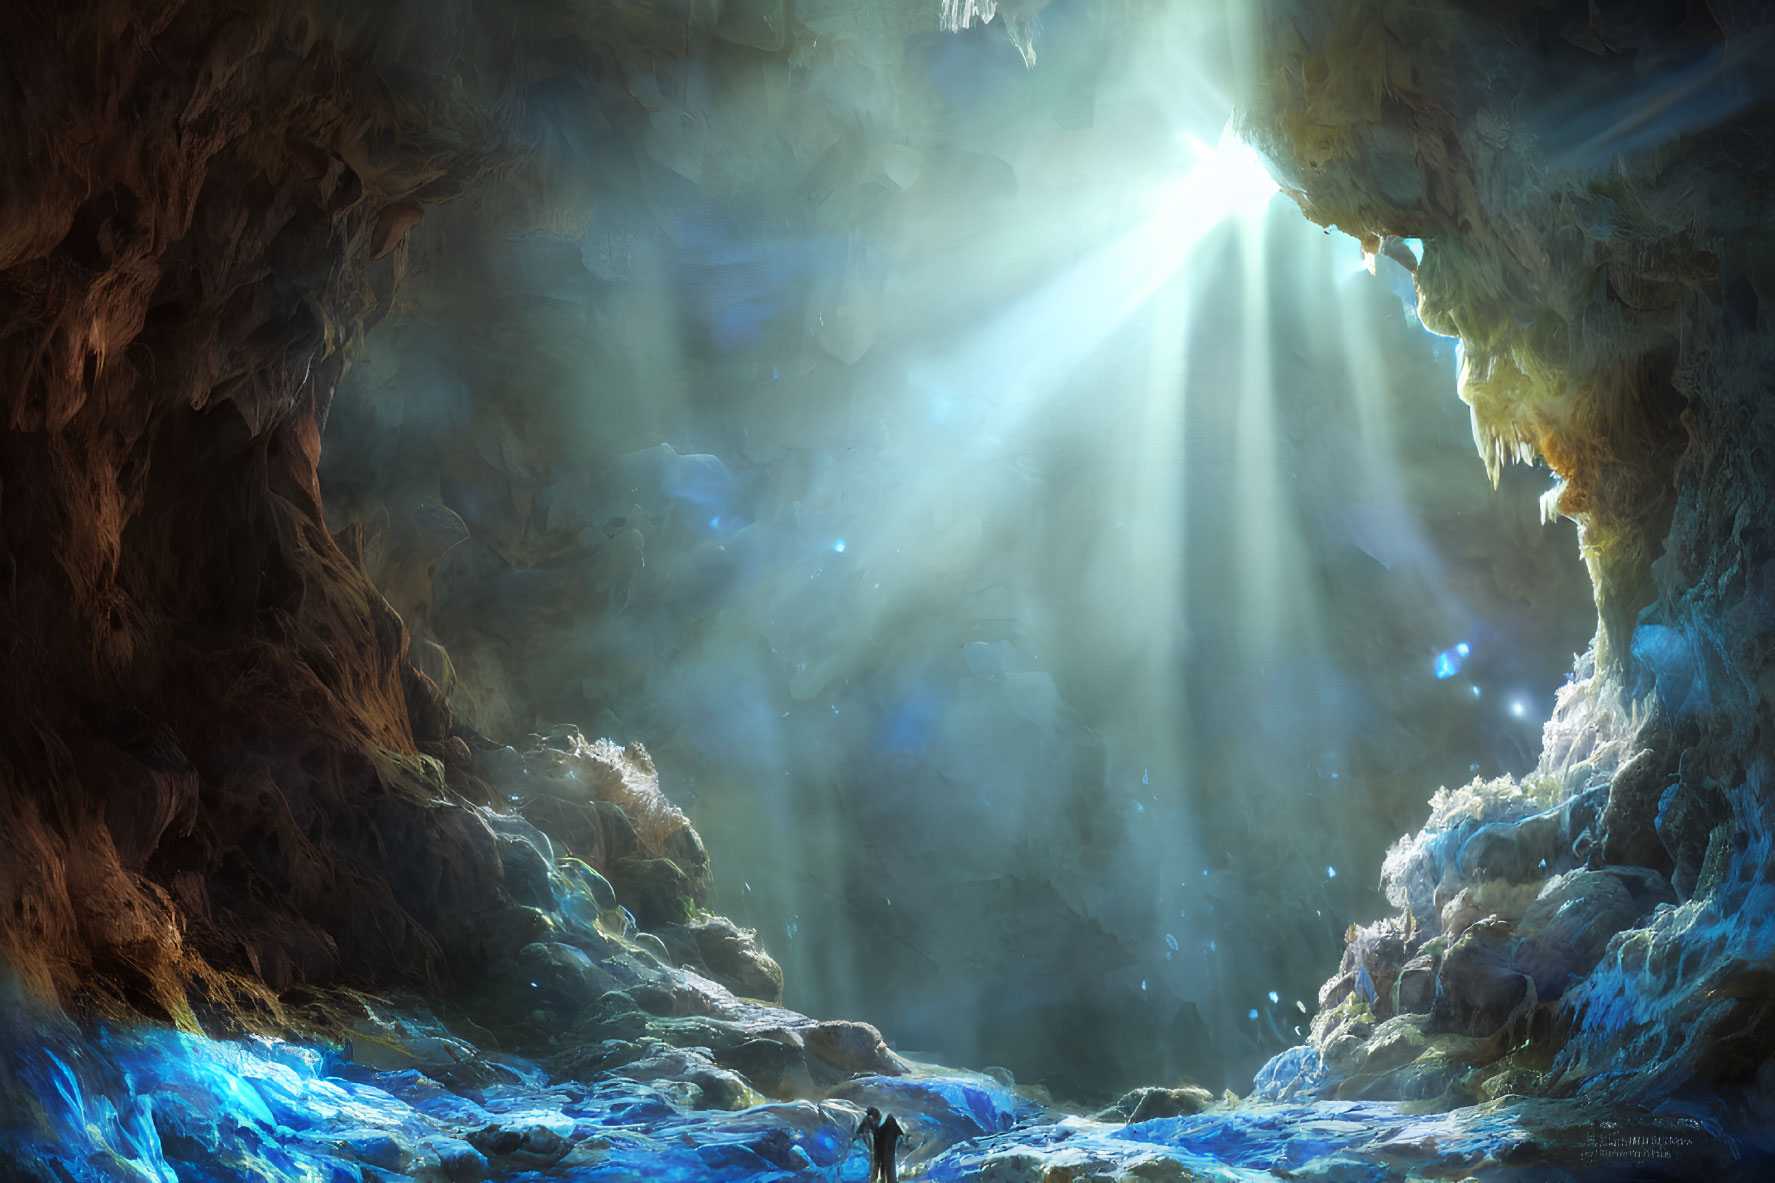 Cavern opening reveals blue-glowing subterranean landscape